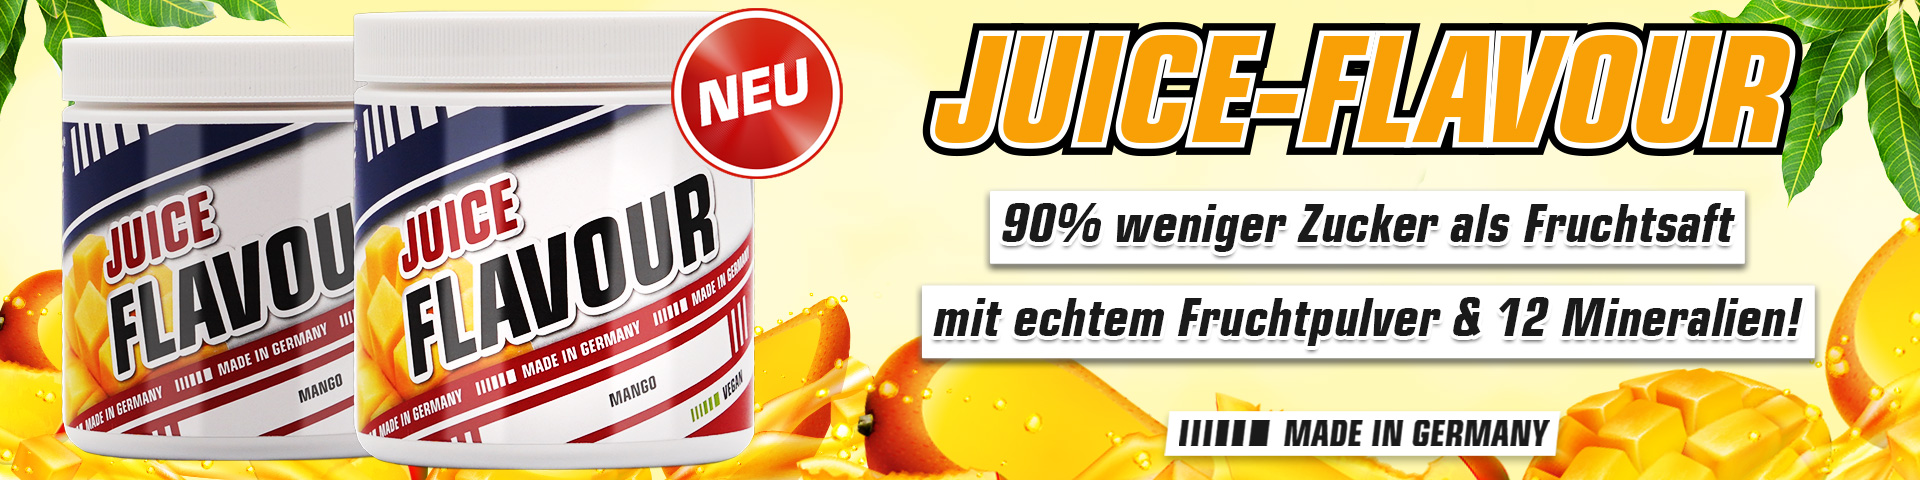 juice-flavour-neu.jpg